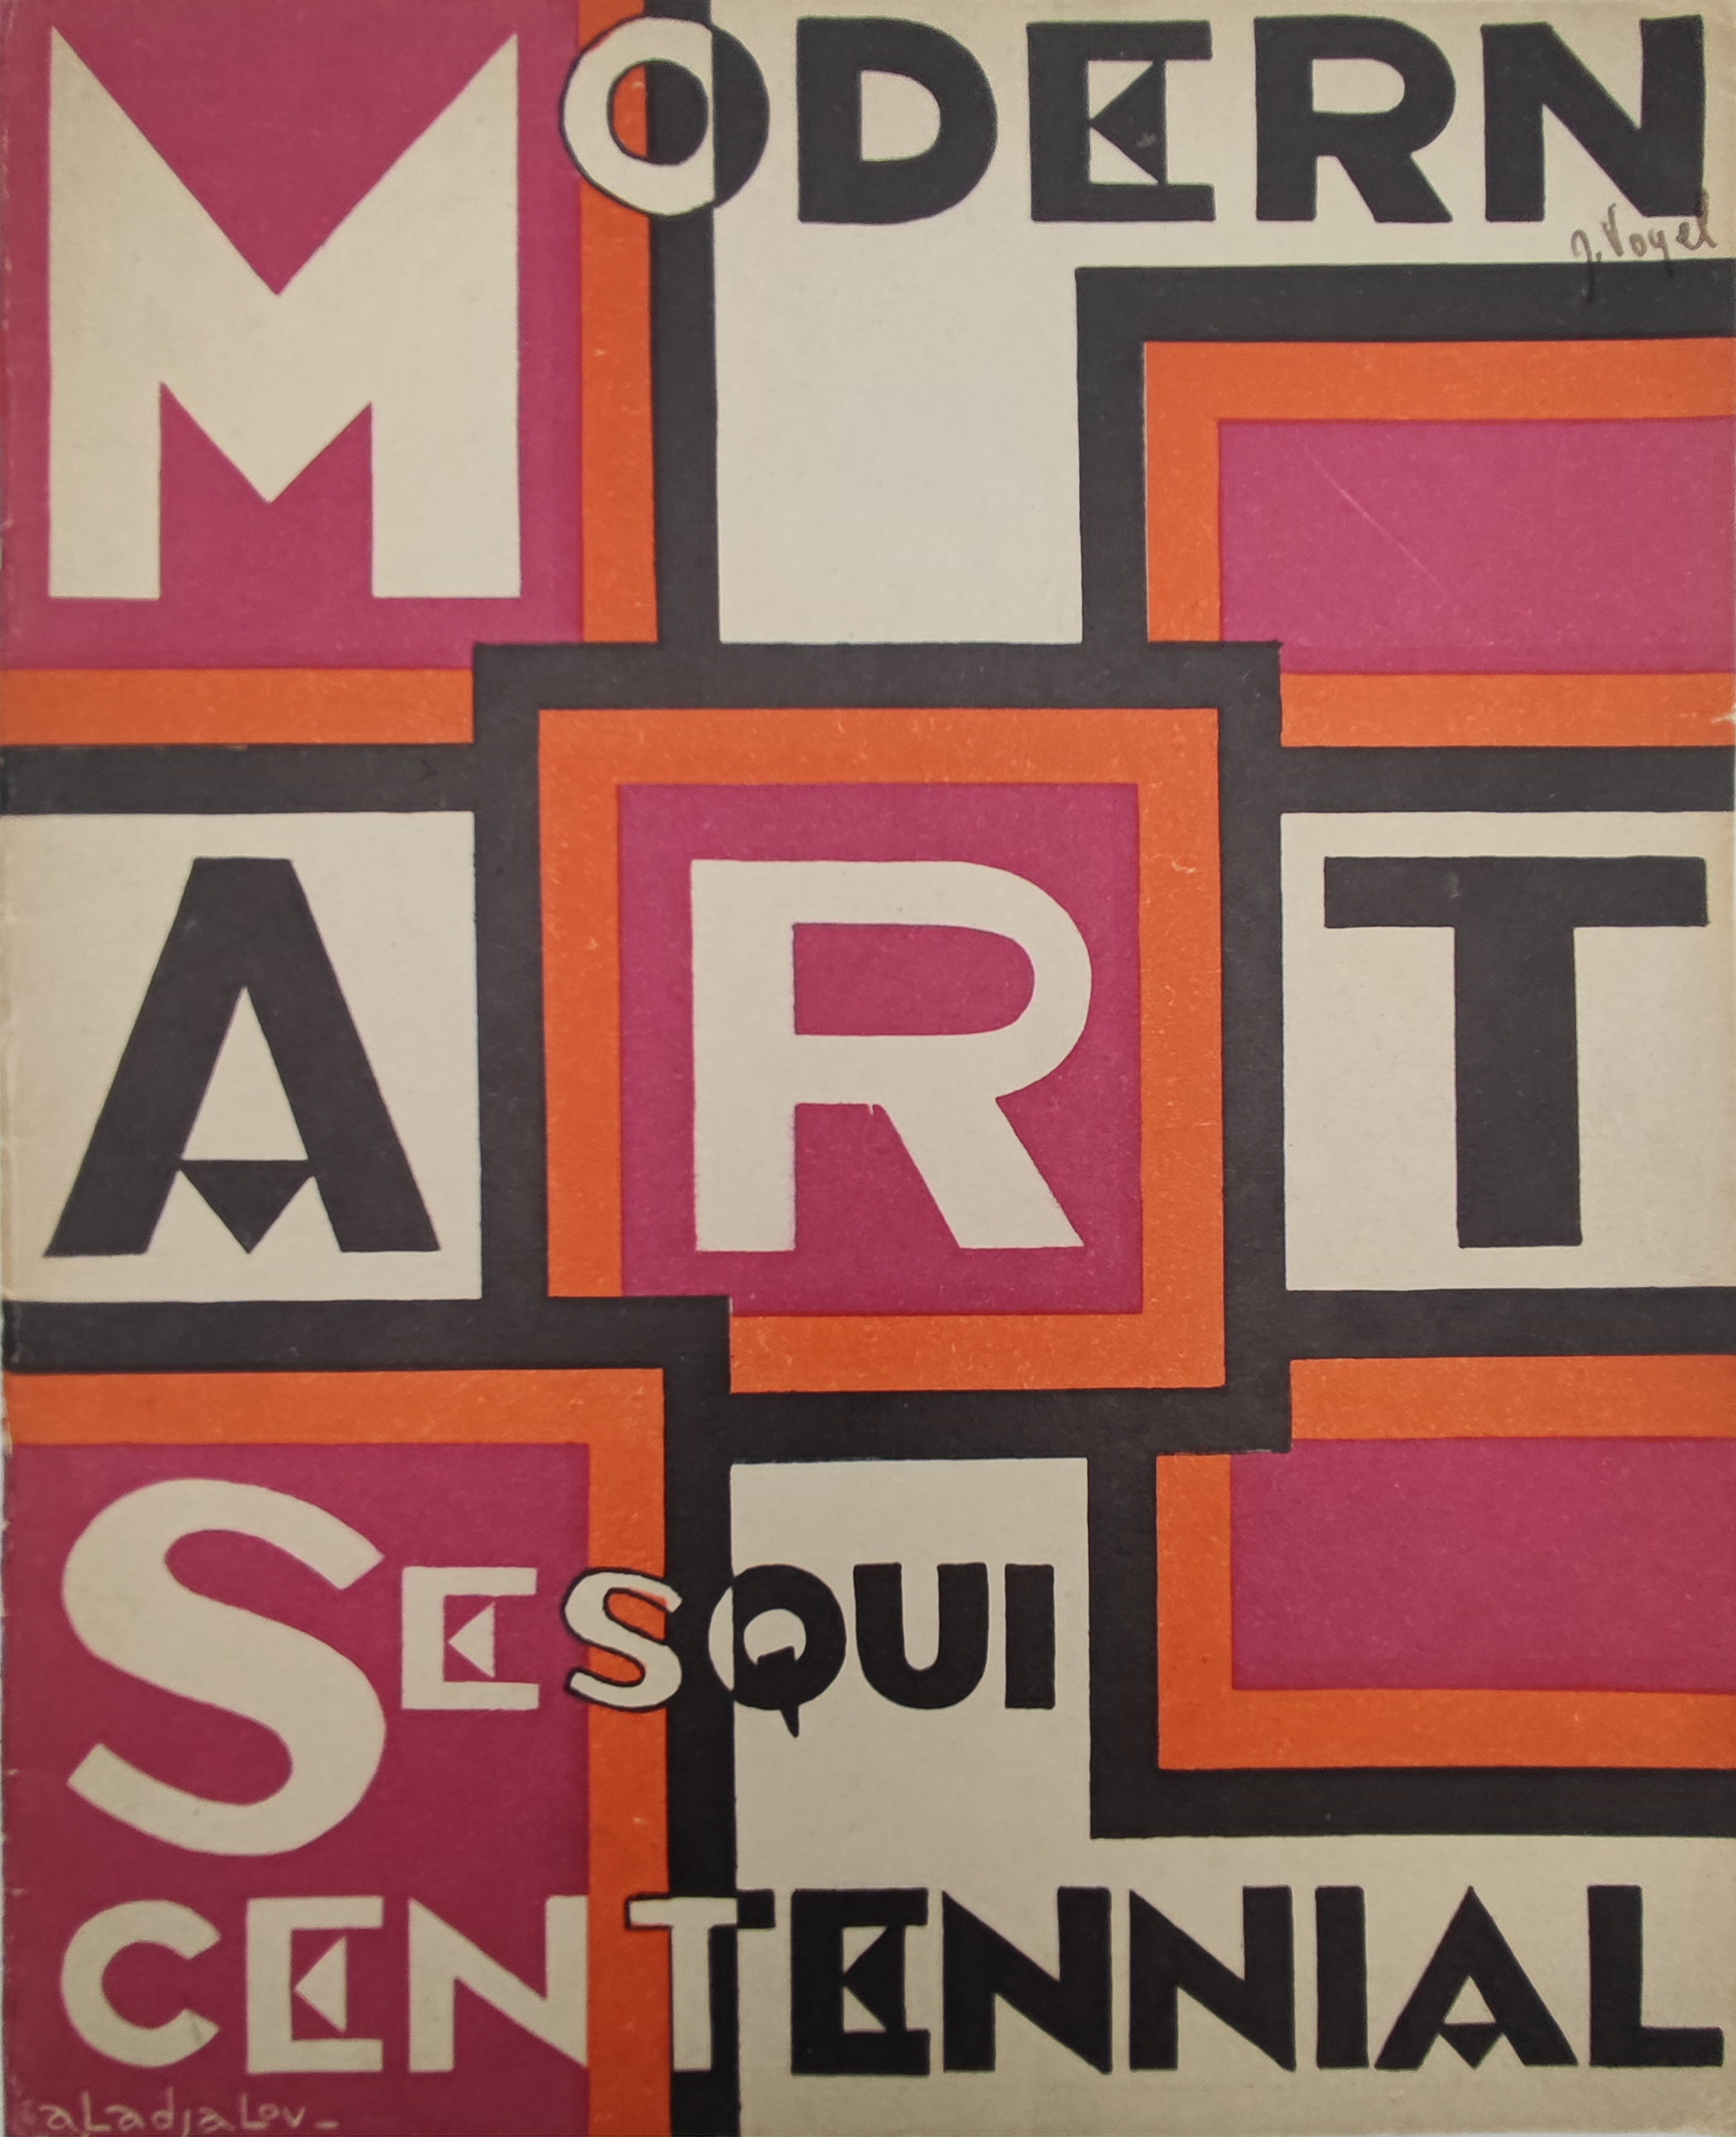 Modern Art at the Sesqui-centennial exhibition. New York, 1926.